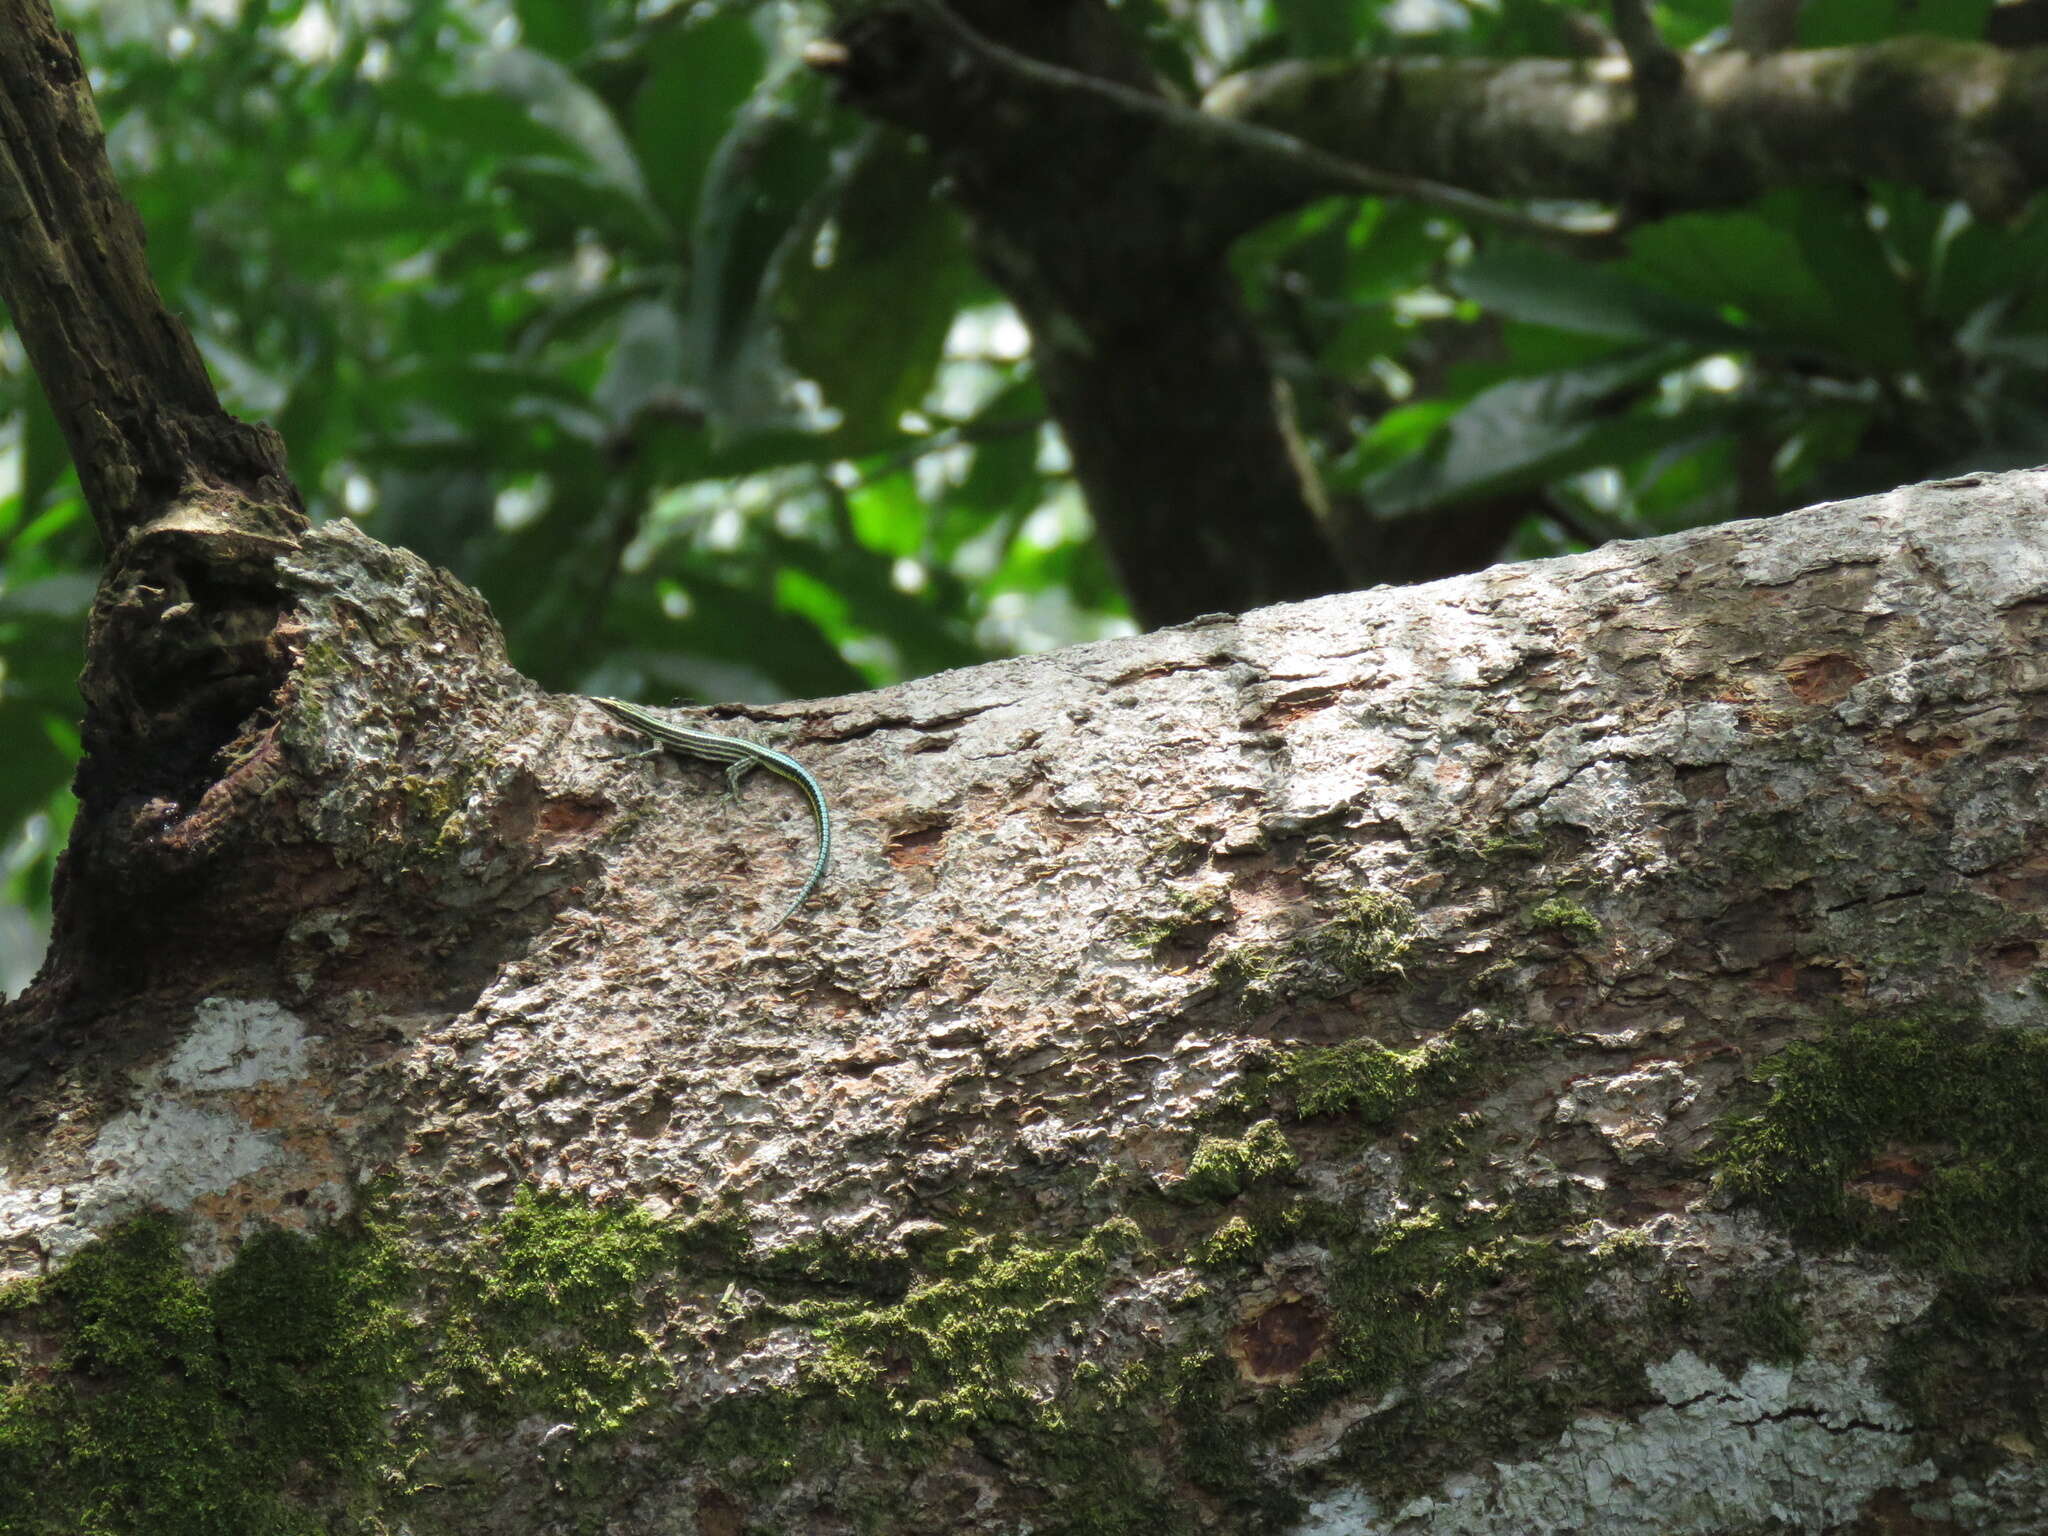 Image of Sawtail Lizard